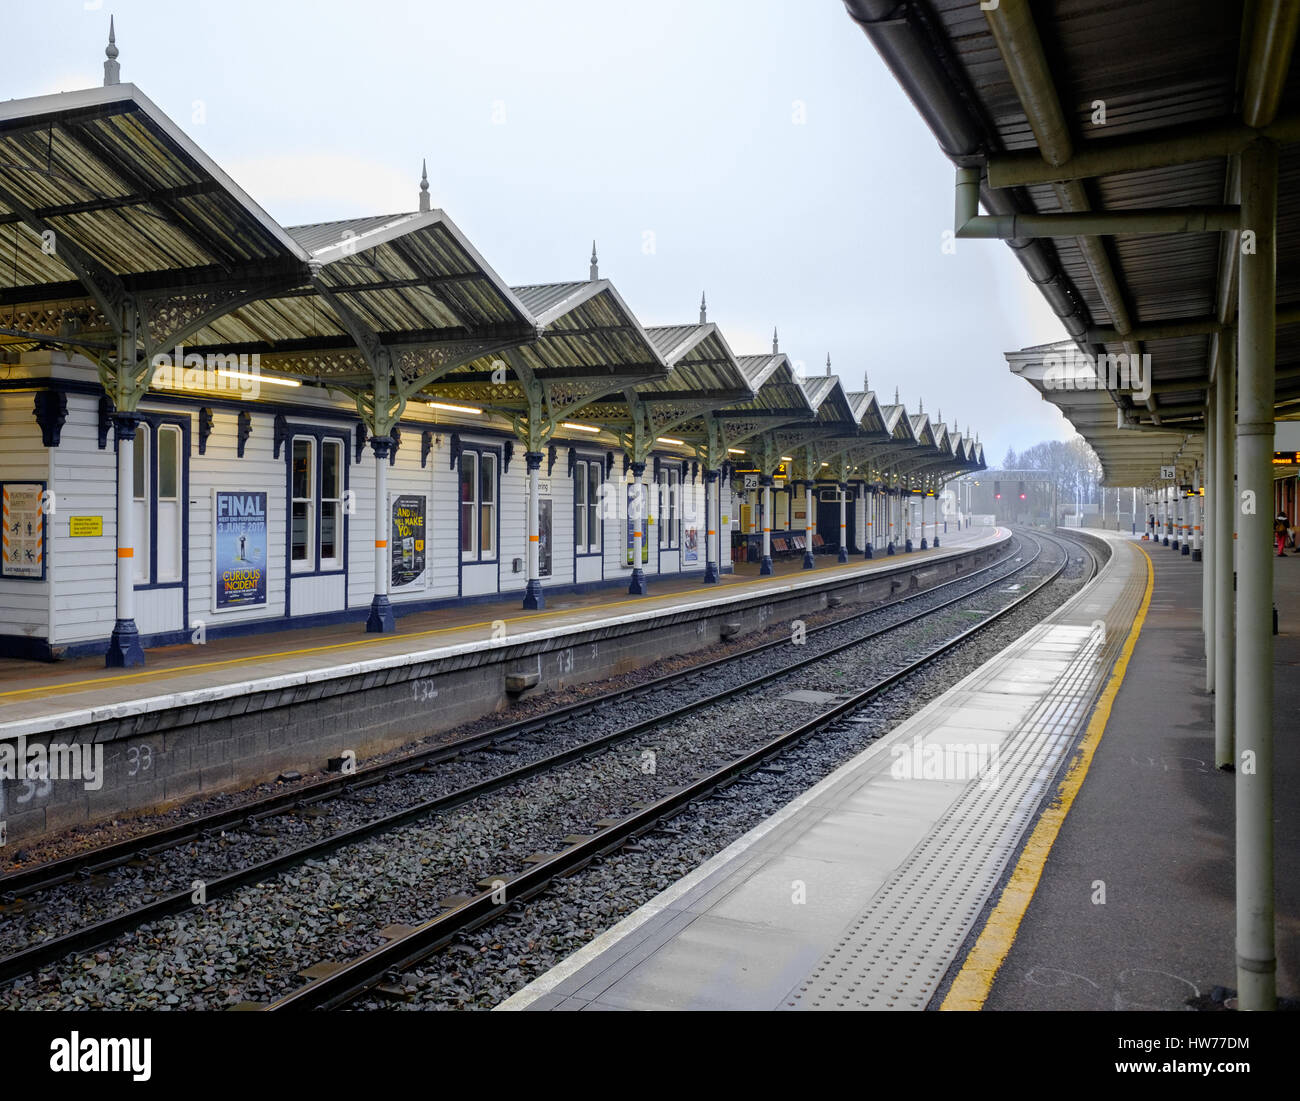 Kettering station, East Midlands, England. Stock Photo